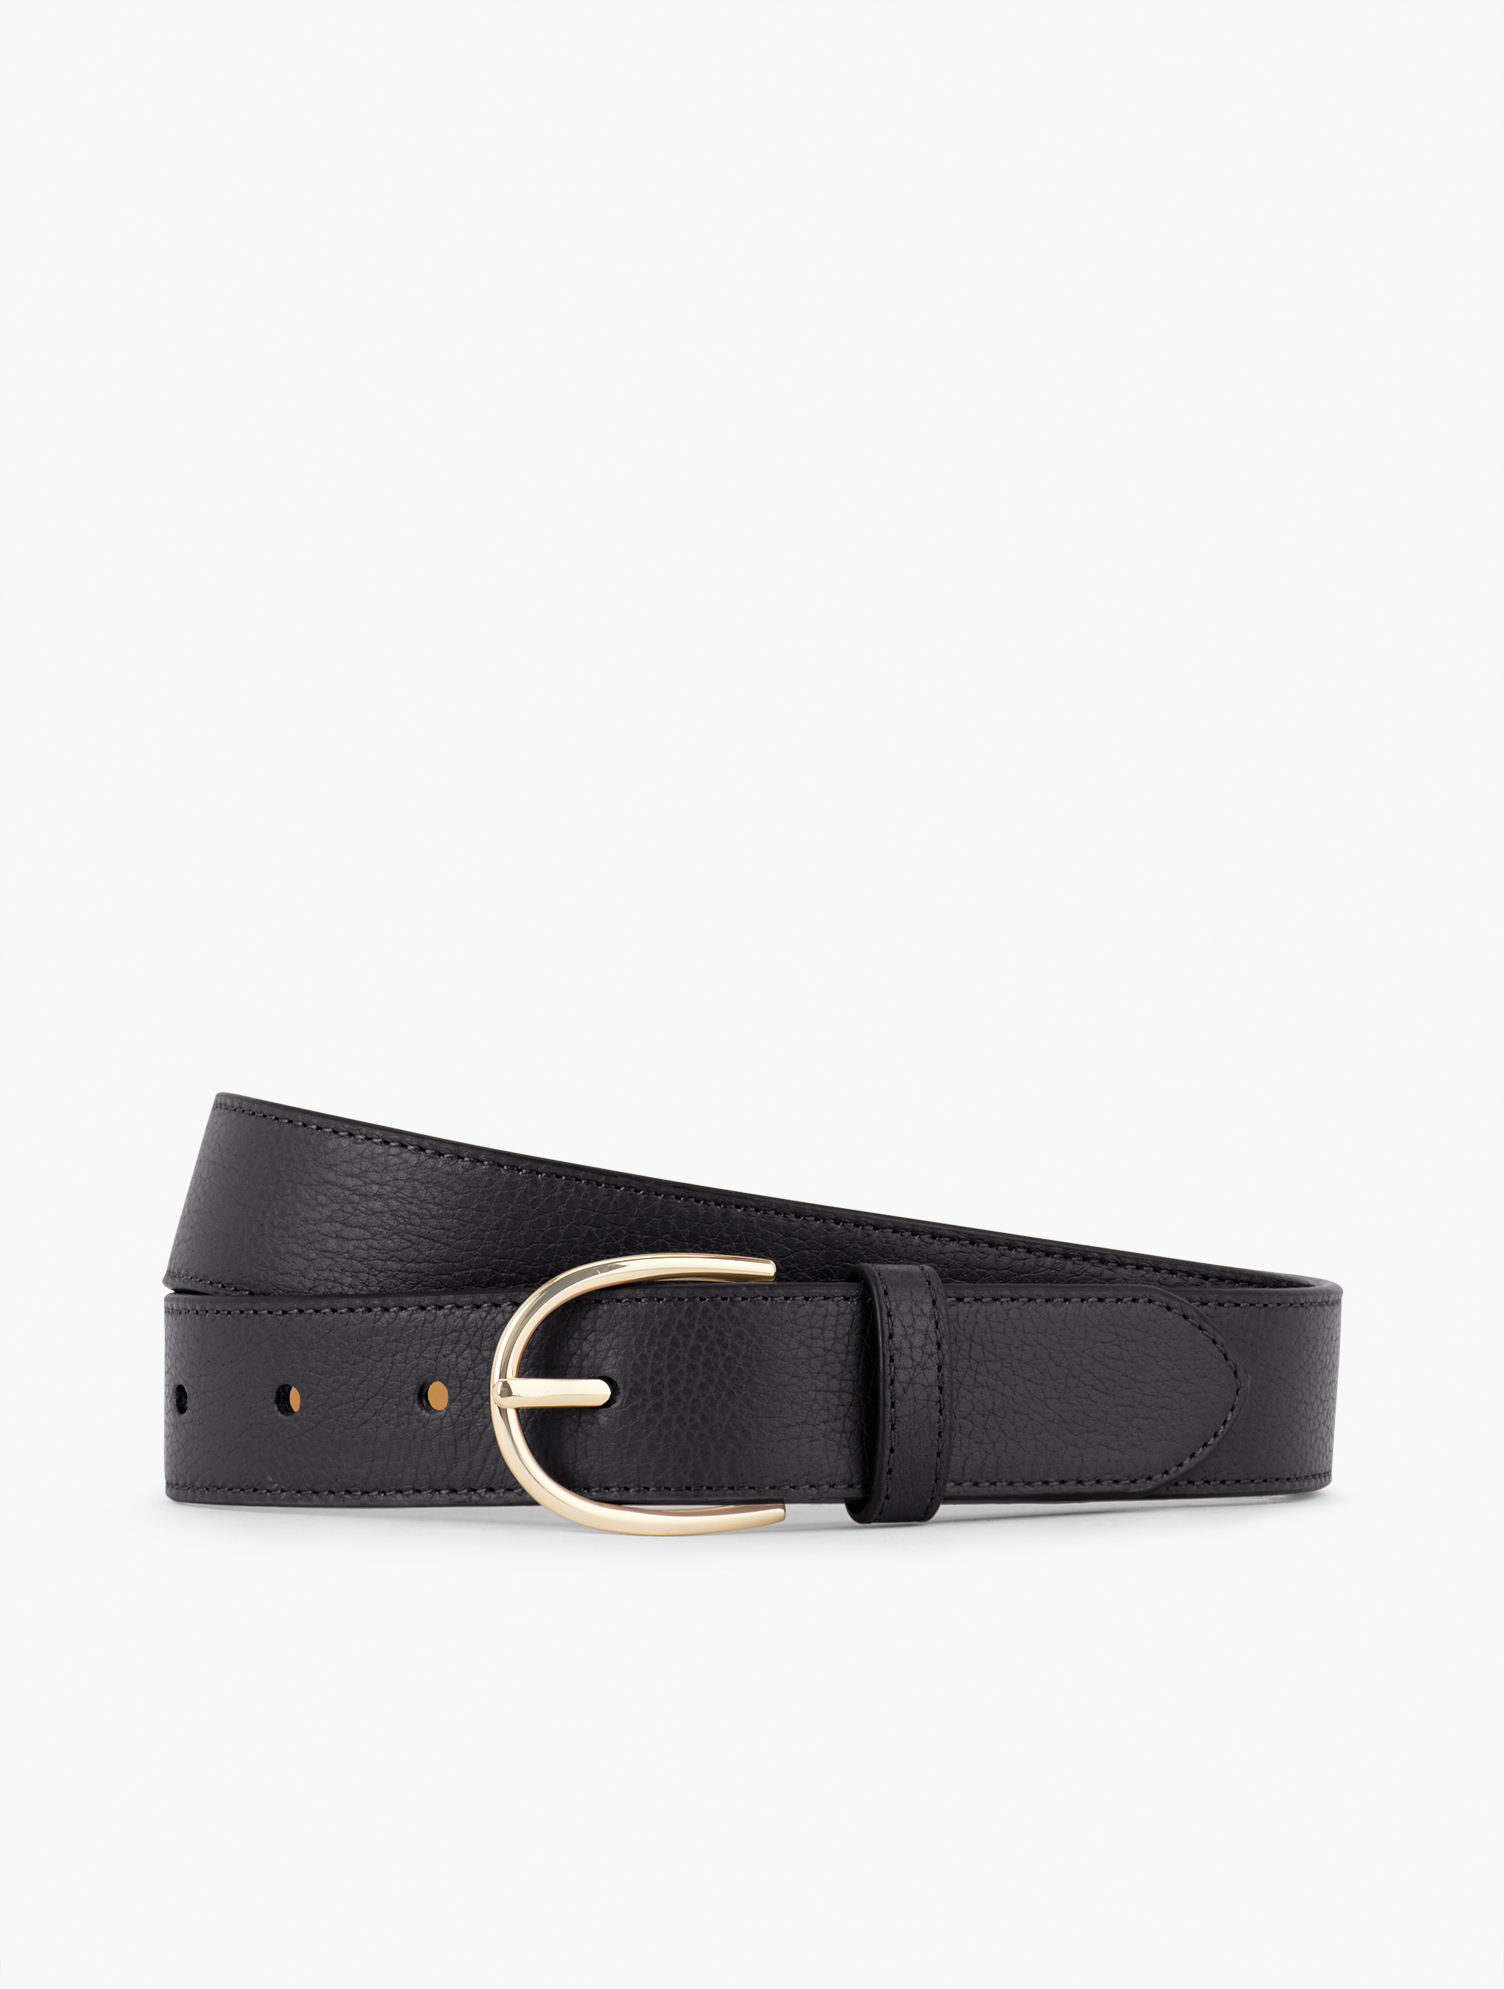 Talbots Leather Belt - Black - Medium